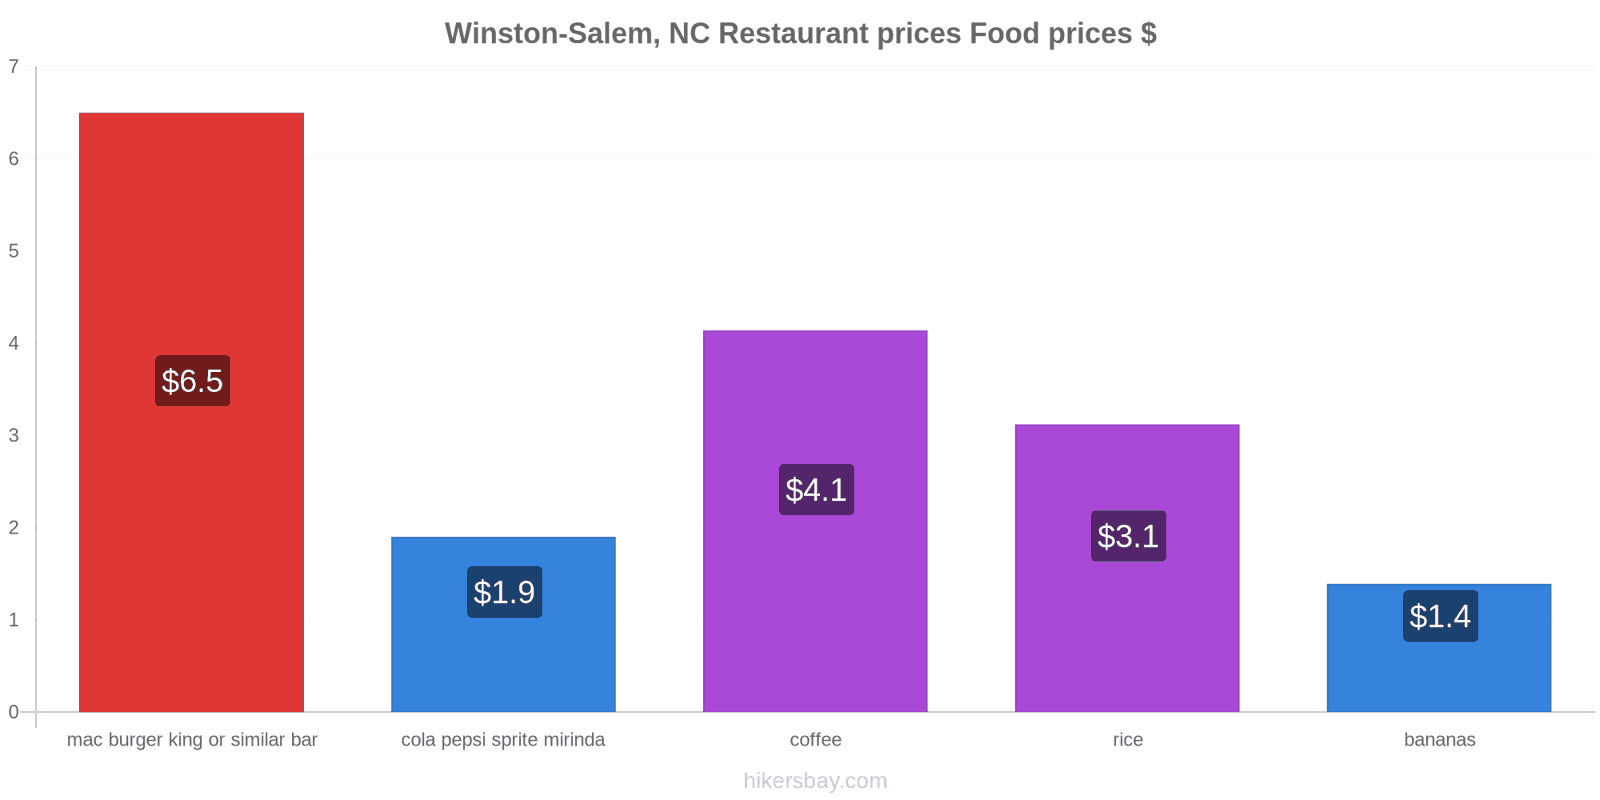 Winston-Salem, NC price changes hikersbay.com